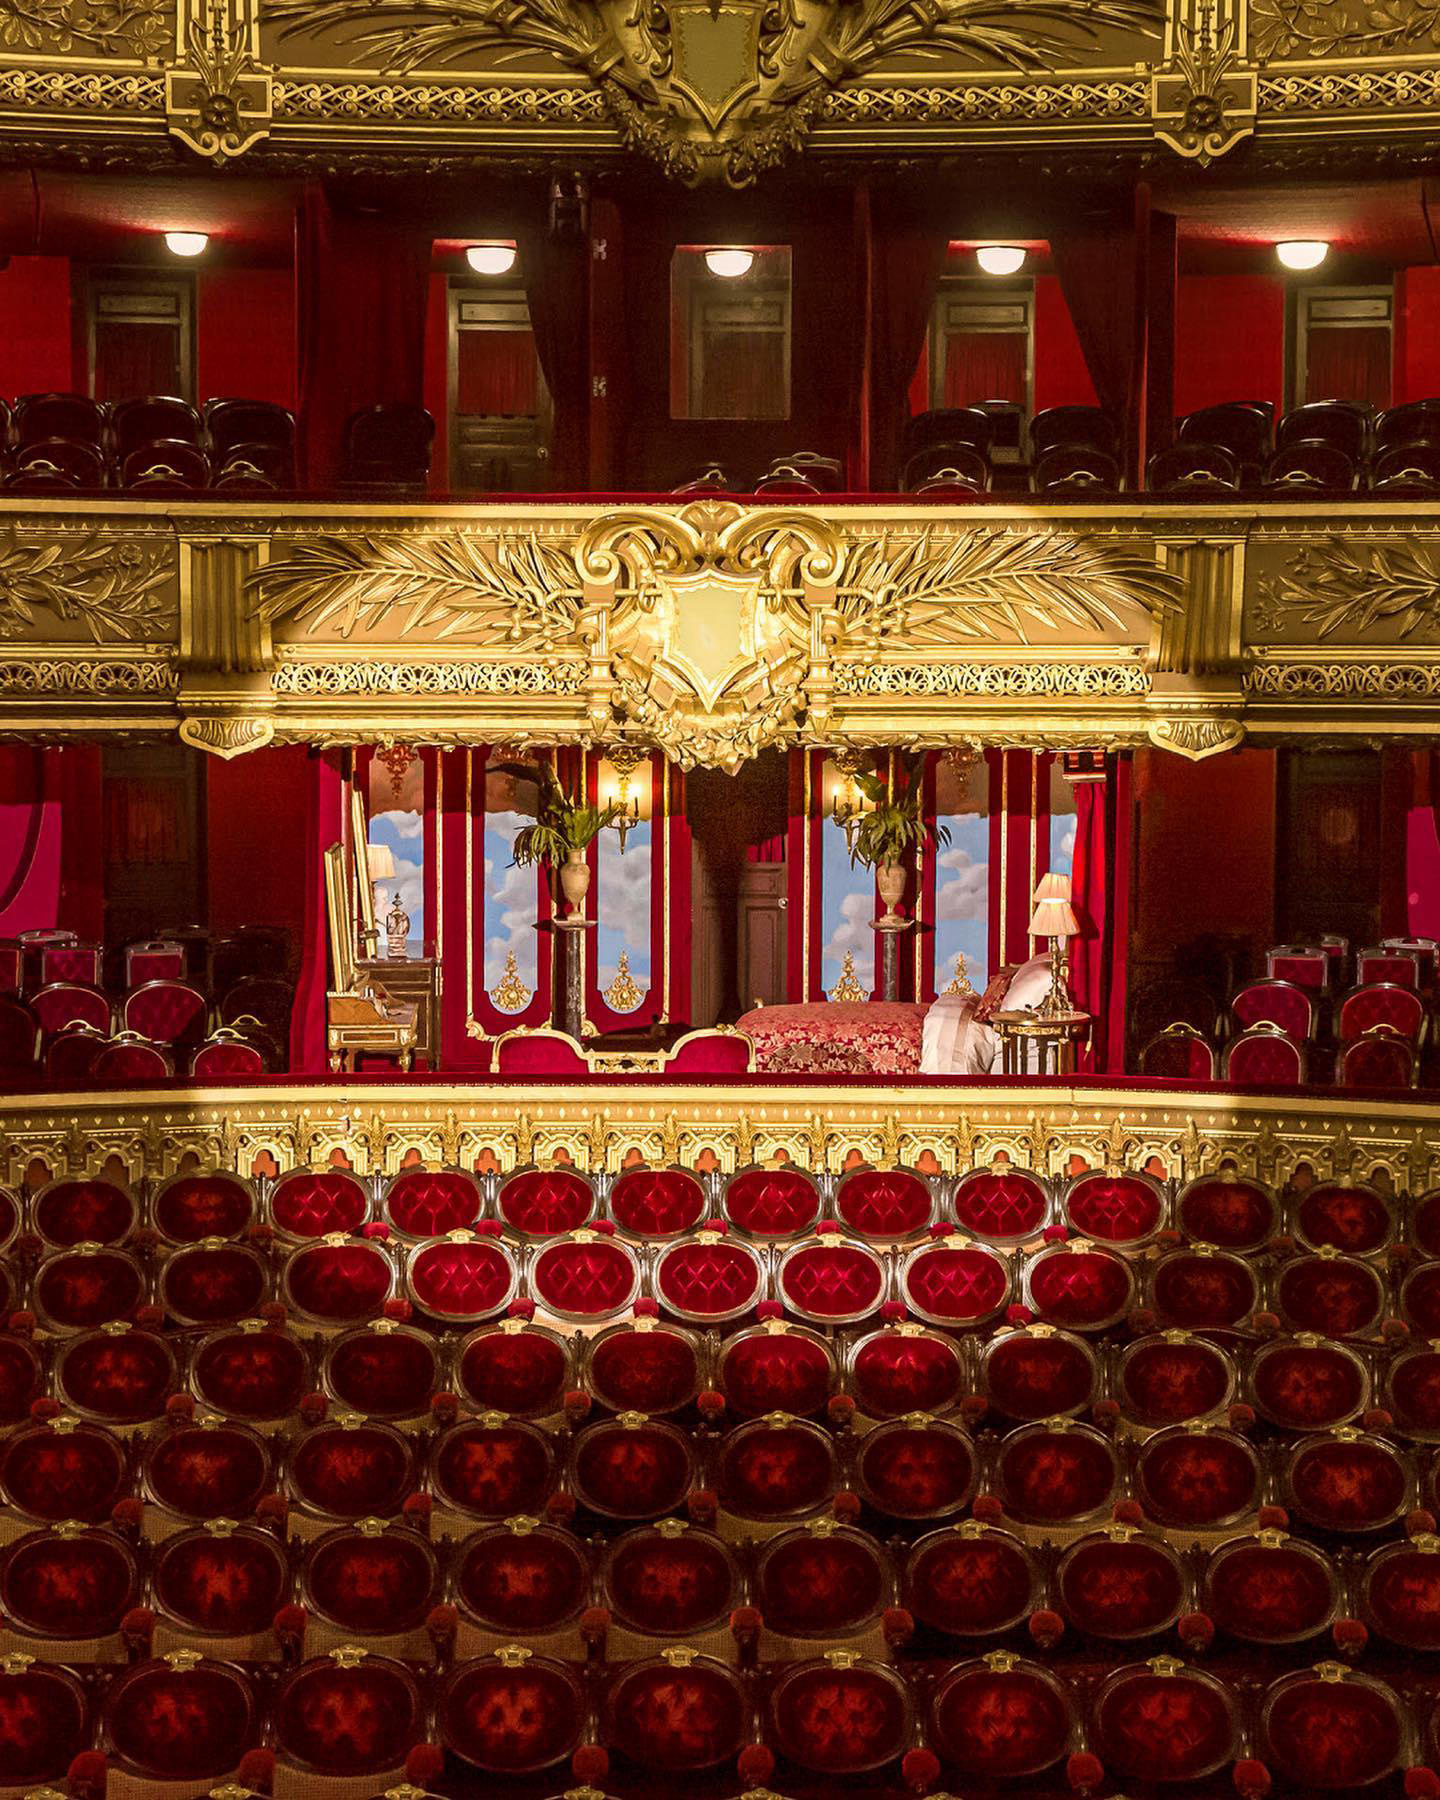 image  1 Stay at the Palais Garnier—the Parisian opera house that inspired #andrewlloydwebber’s #phantomopera